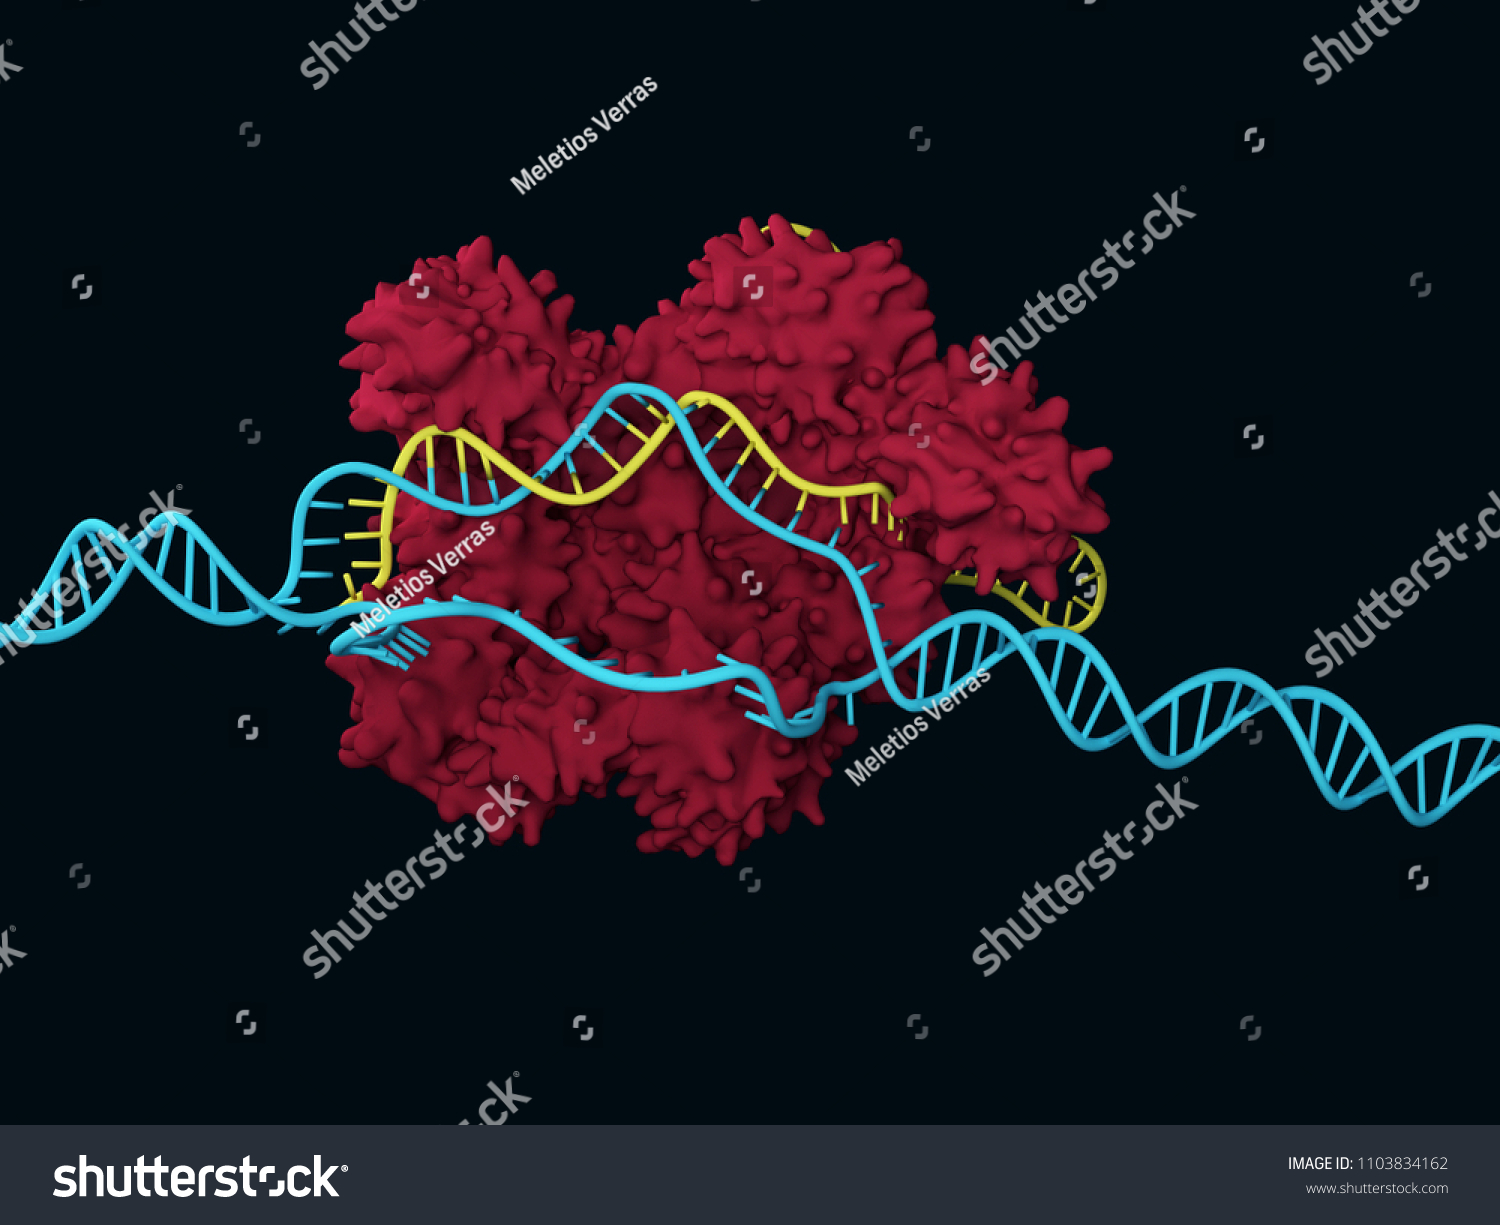 3d Illustration Crisprcas9 Genome Editing System Stock Illustration 1103834162 2751